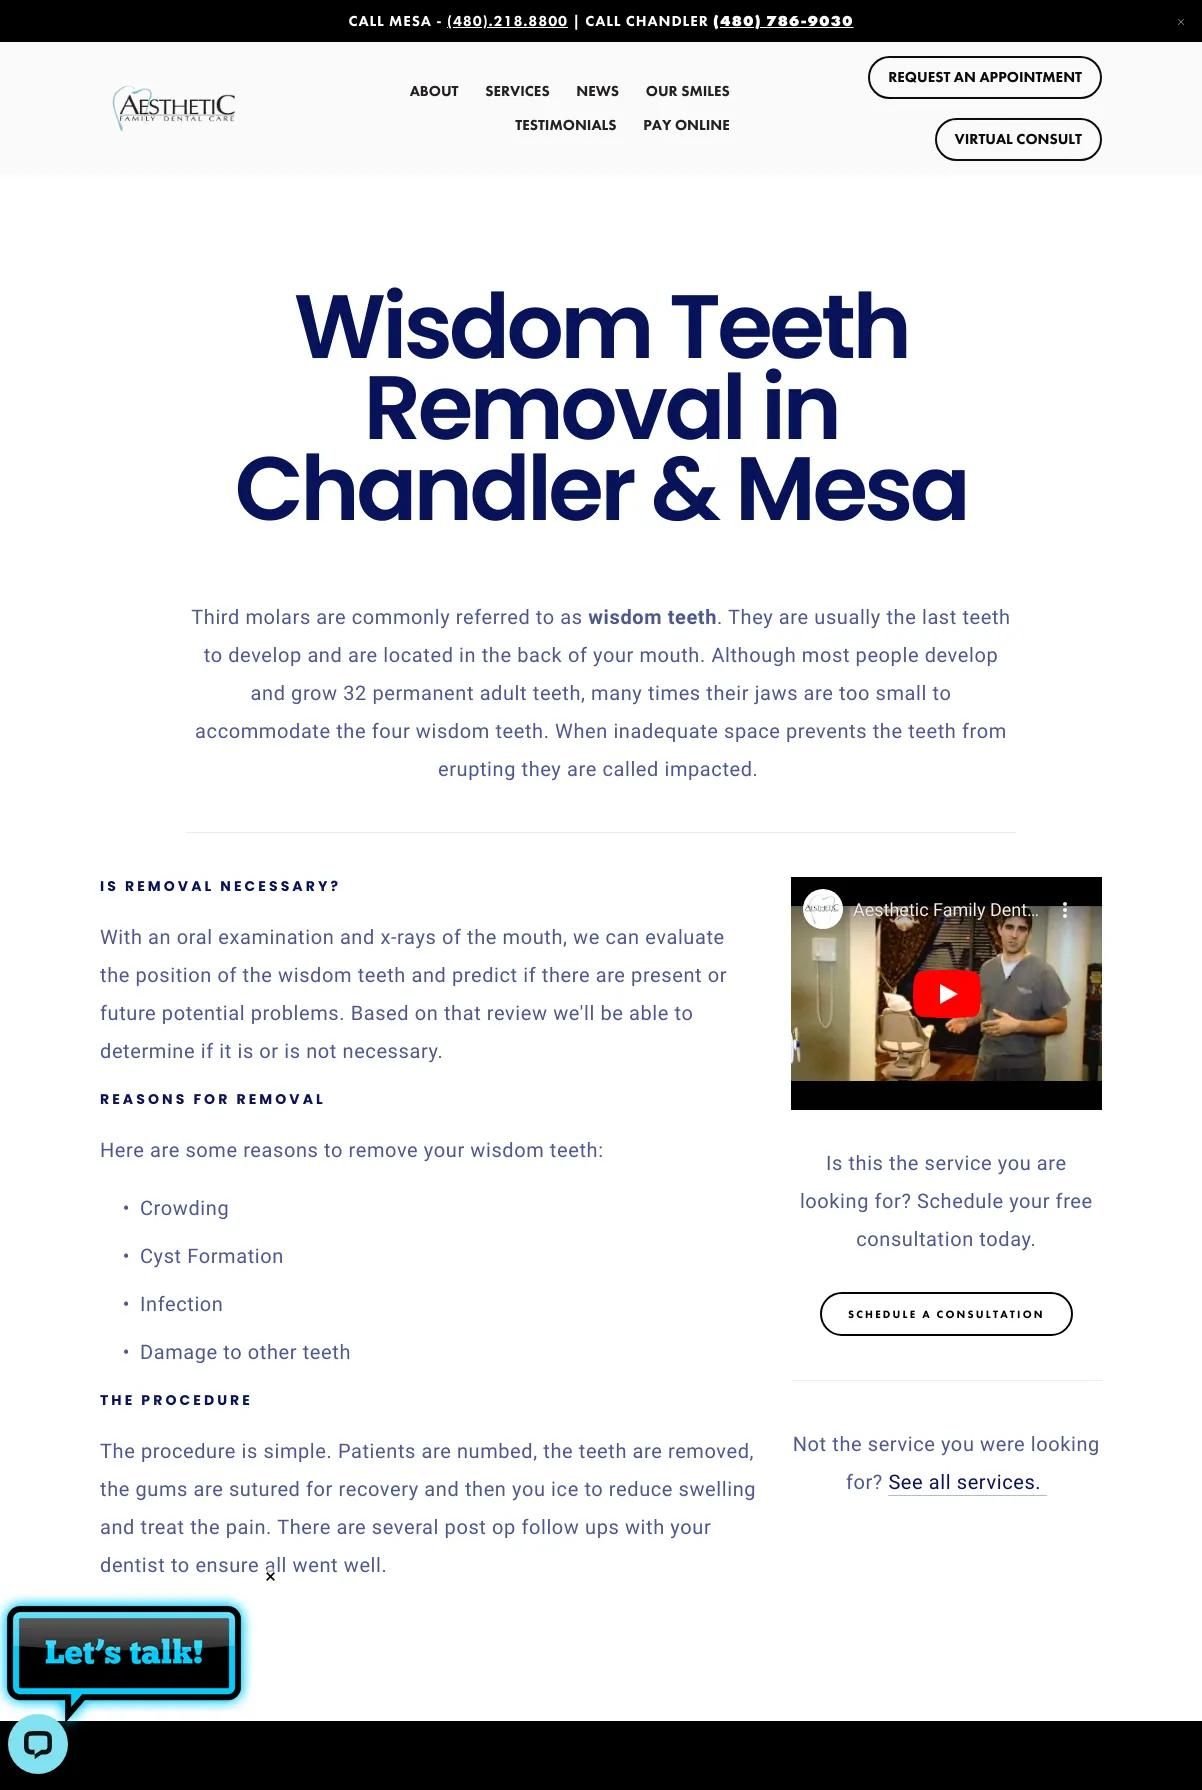 Screenshot 3 of Aesthetic Family Dental Care (Example Squarespace Dentist Website)